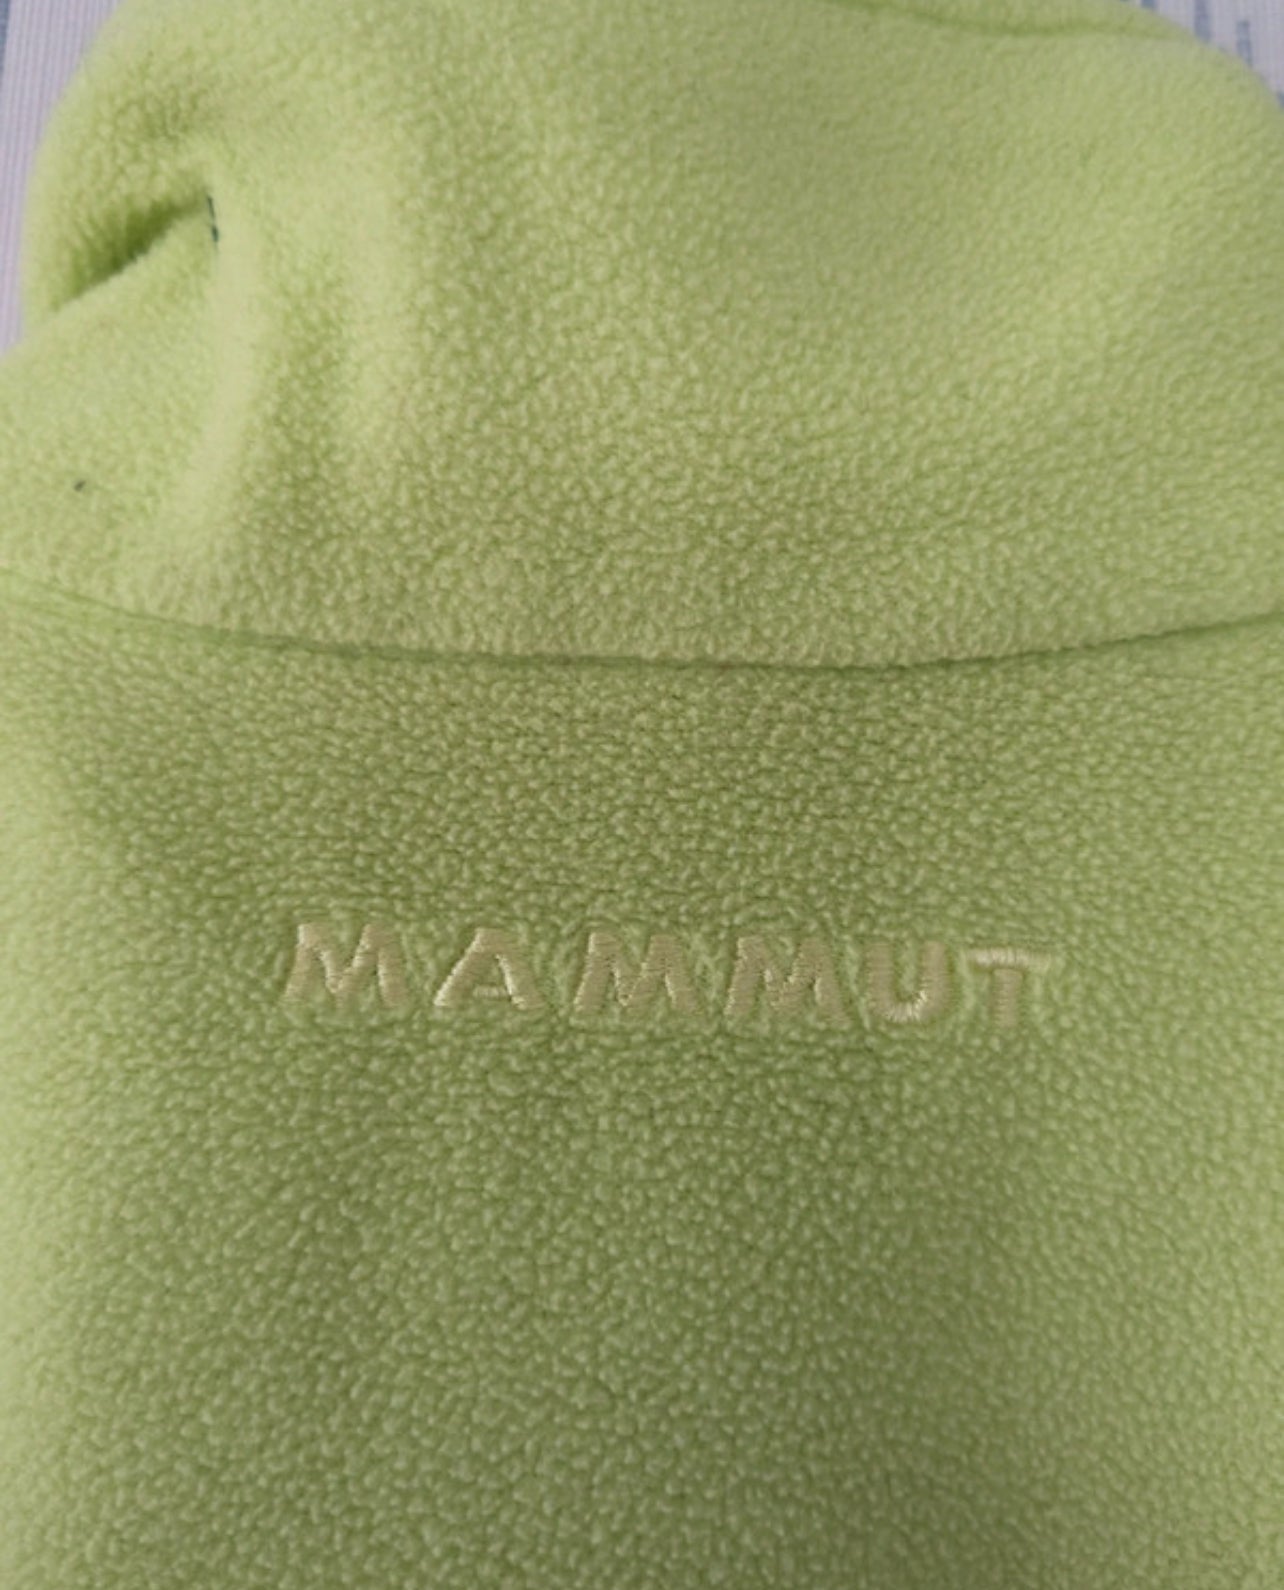 Neck Zip Pullover von Mammut (Damen L) Thermo-Longsleeve grün